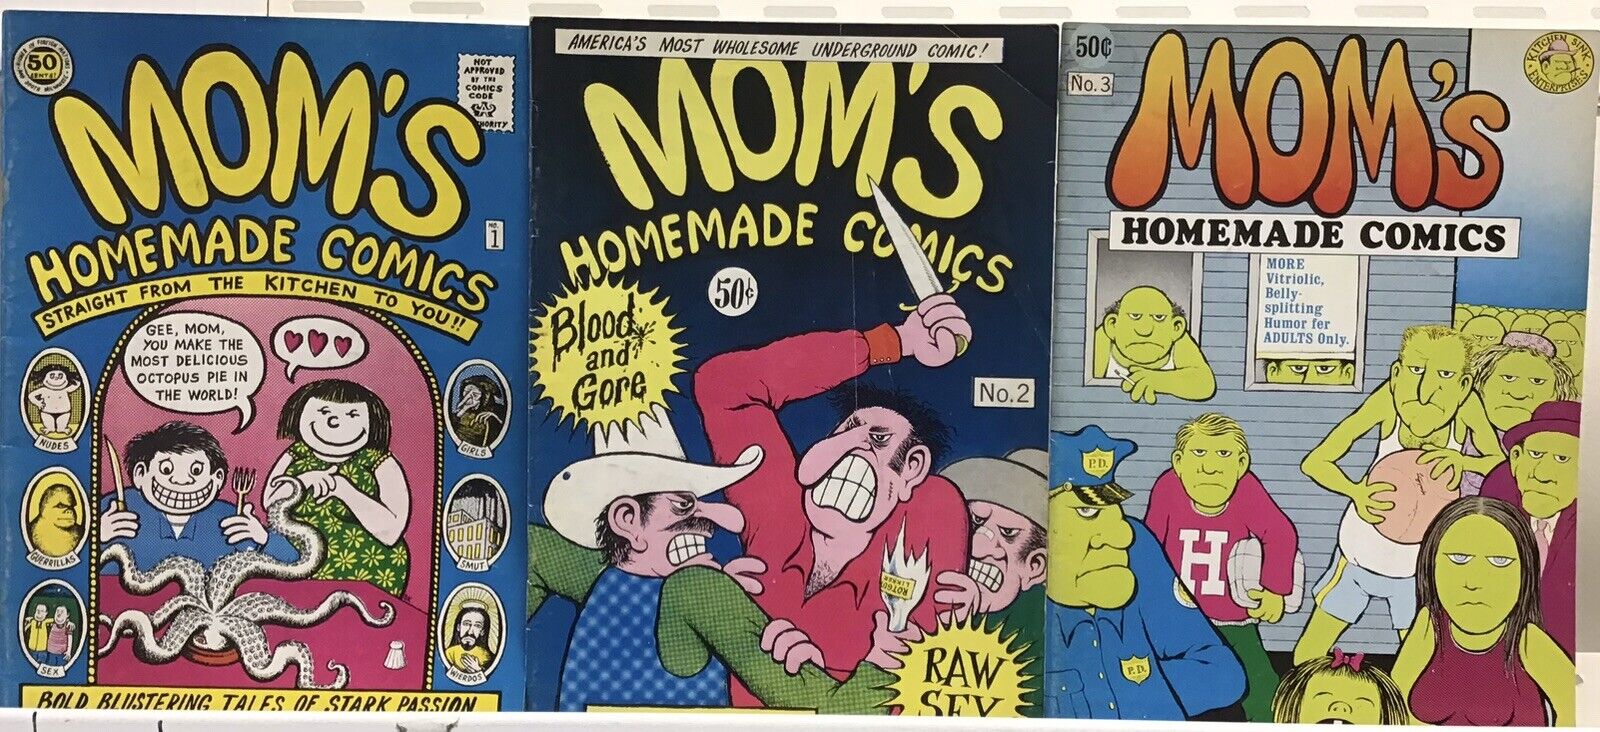 Underground Comics - Mom’s Homemade Comics - Lot of 3